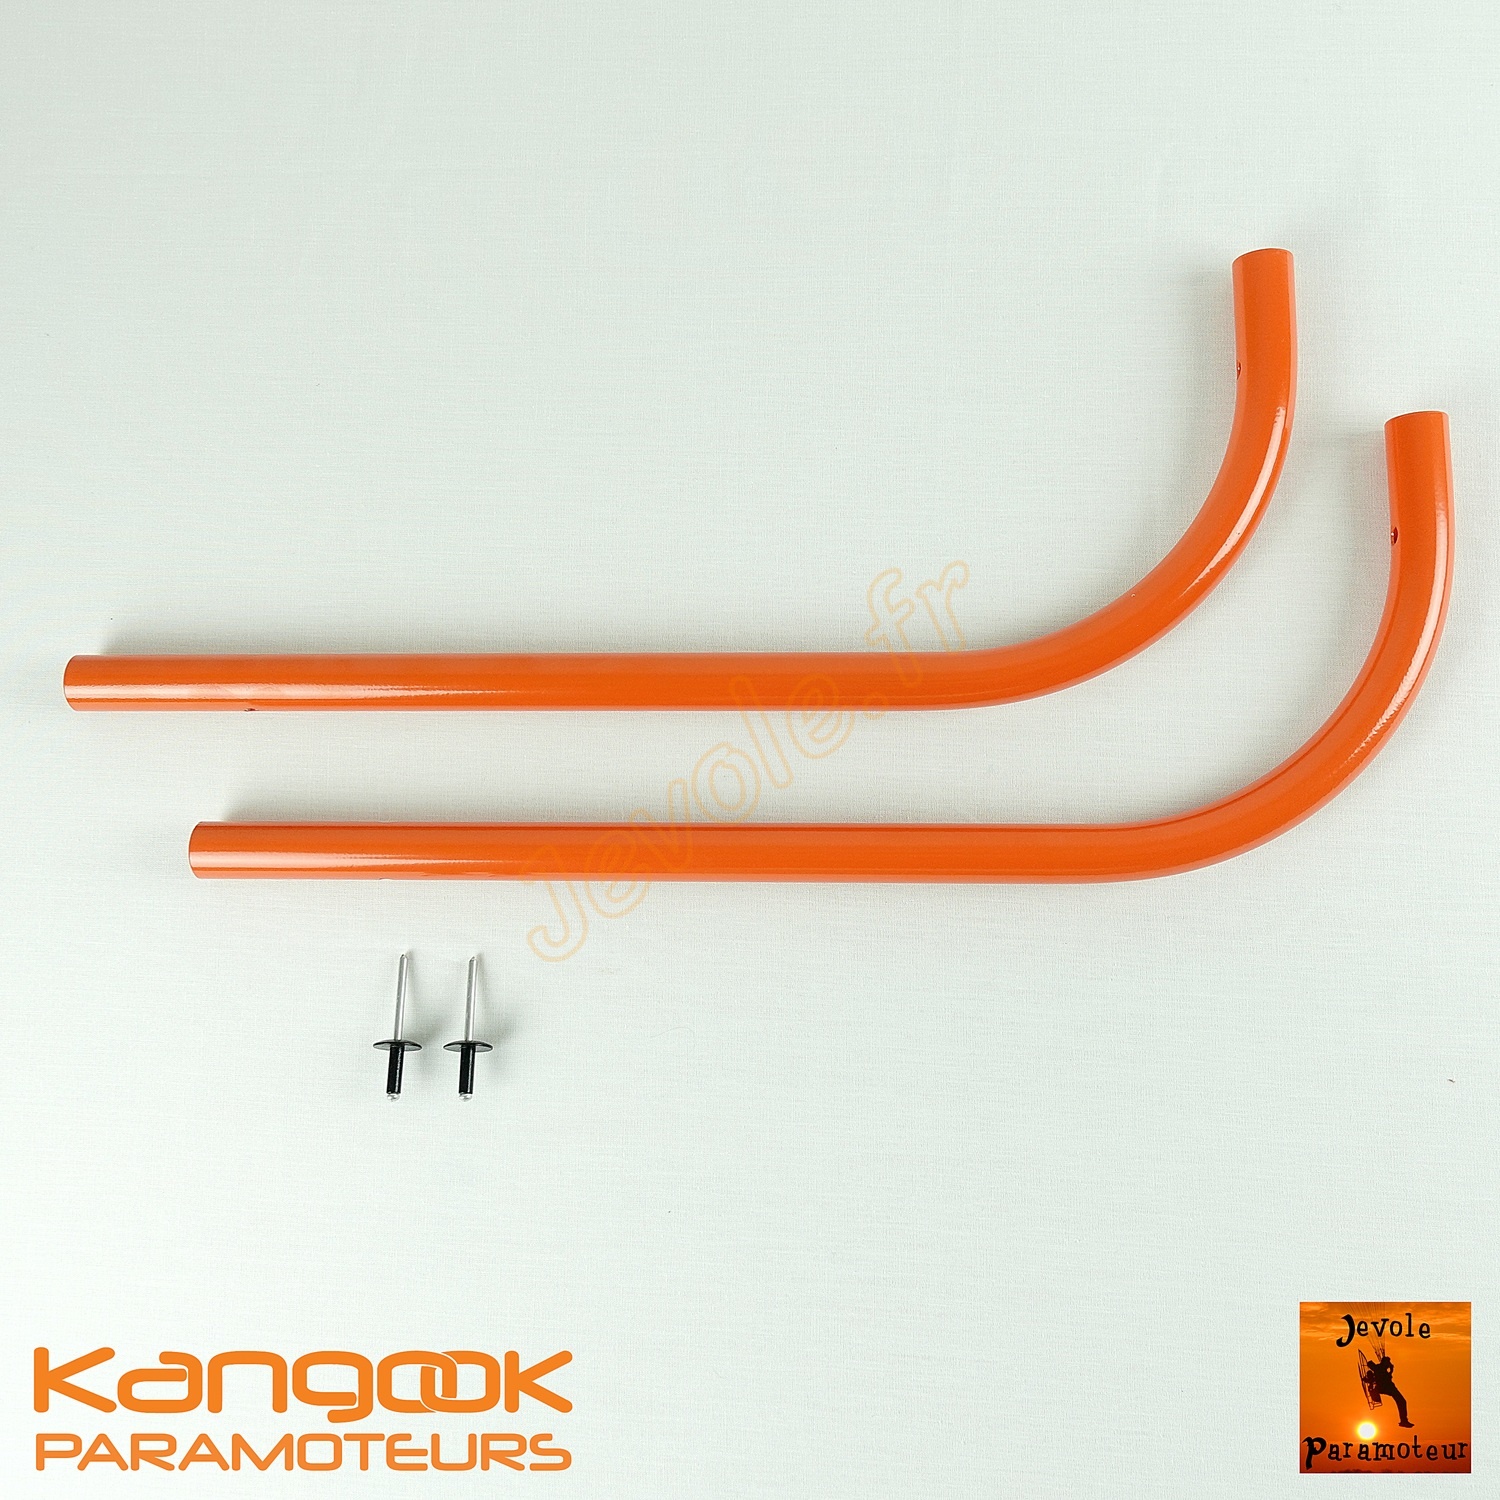 K1aal-cannes-fixes-accroches-sellette-alu-kangook-orange